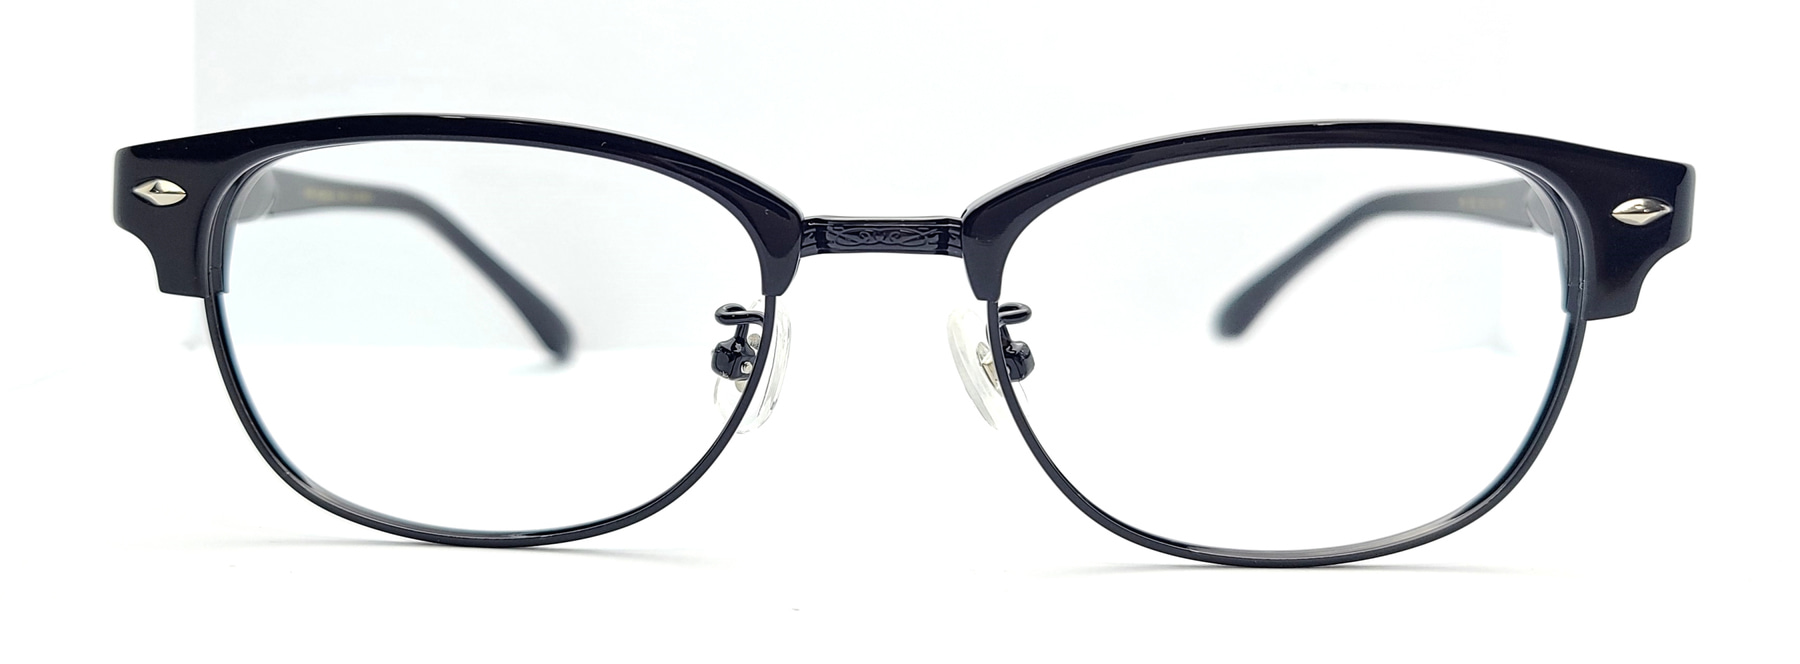 MINIHOUSE M-1382, Korean glasses, sunglasses, eyeglasses, glasses